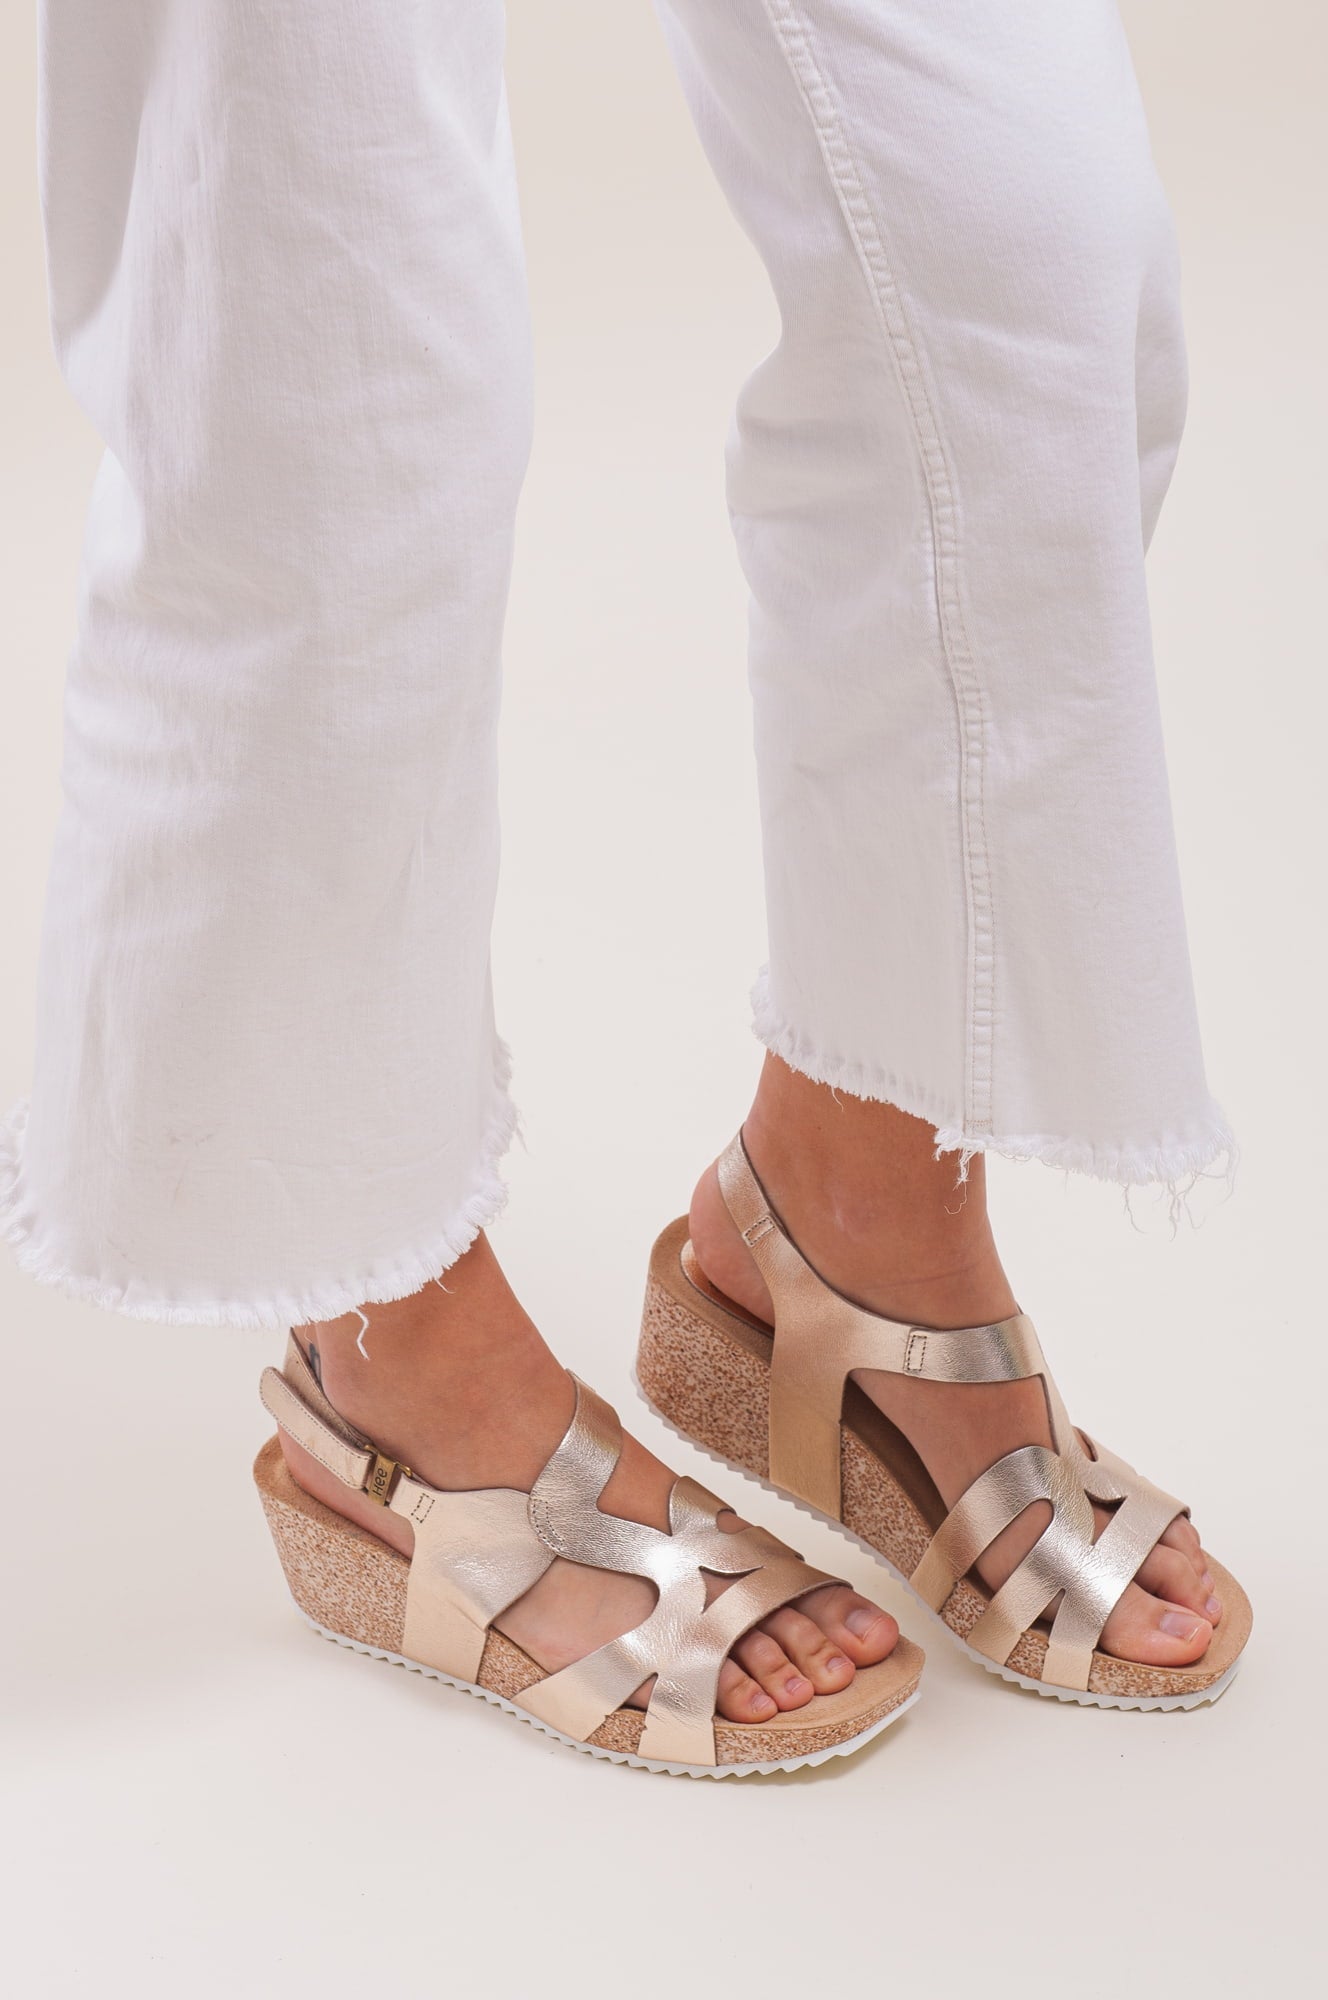 Sandalia de plataforma veraniega. Zapato de mujer ligero y versátil.